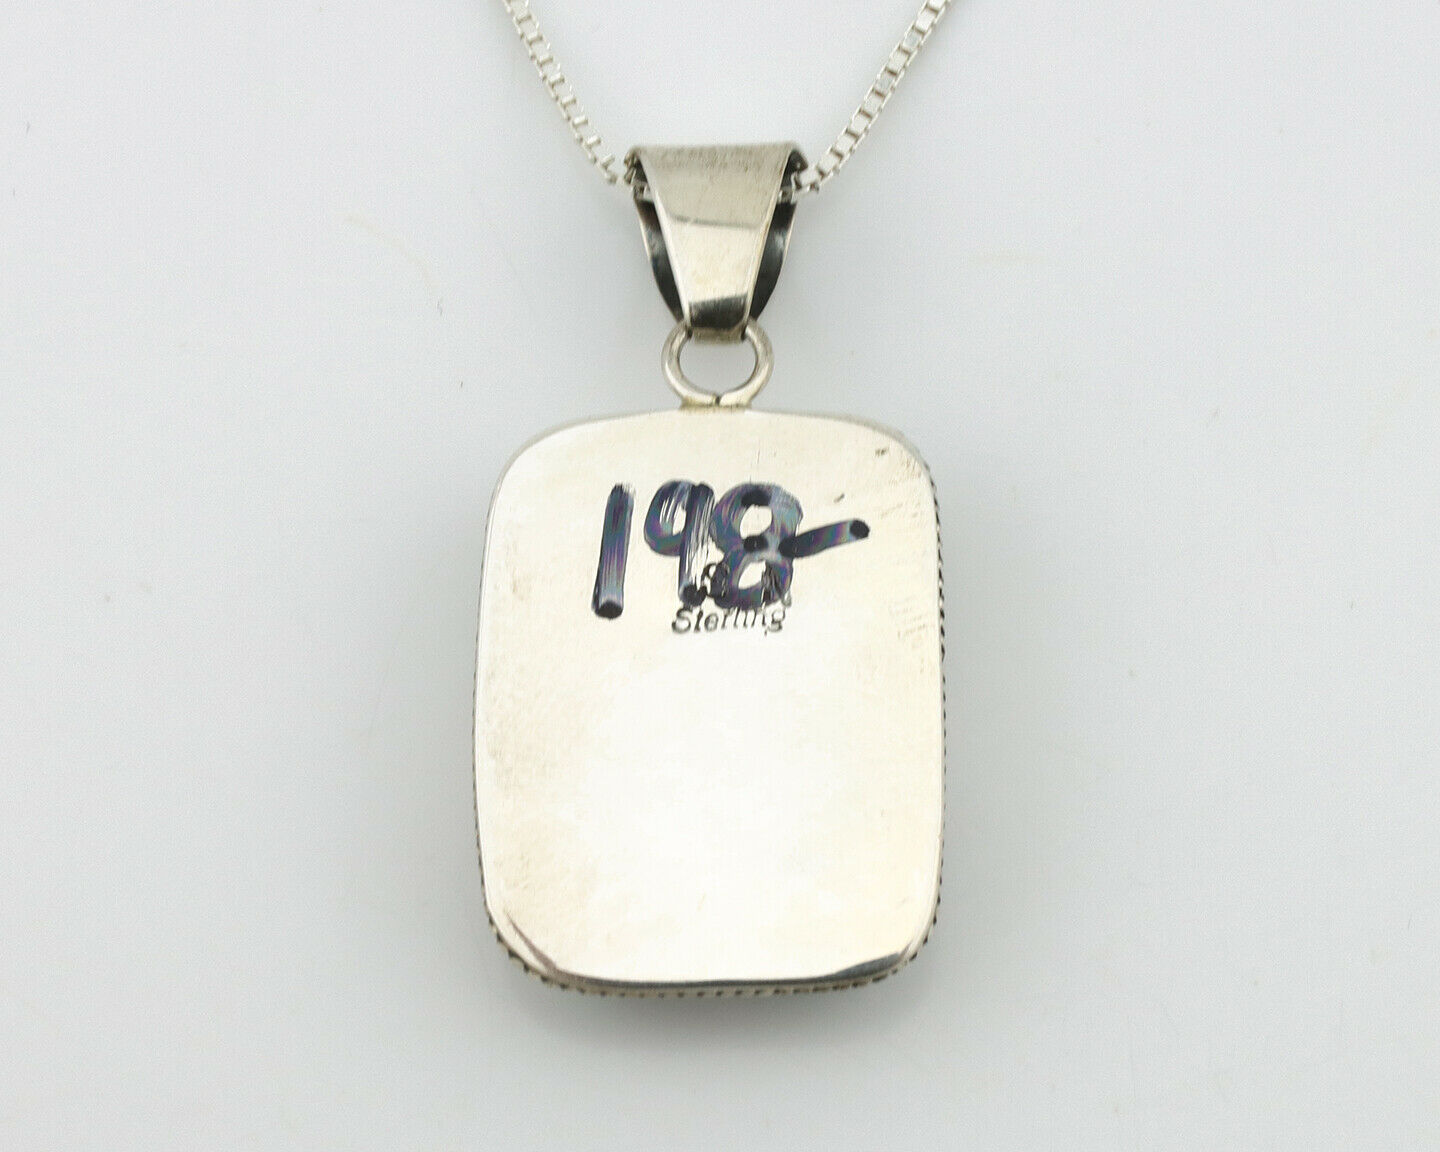 Navajo Handmade Inlaid Gemstone Pendant .925 Silver Signed SN C.80's